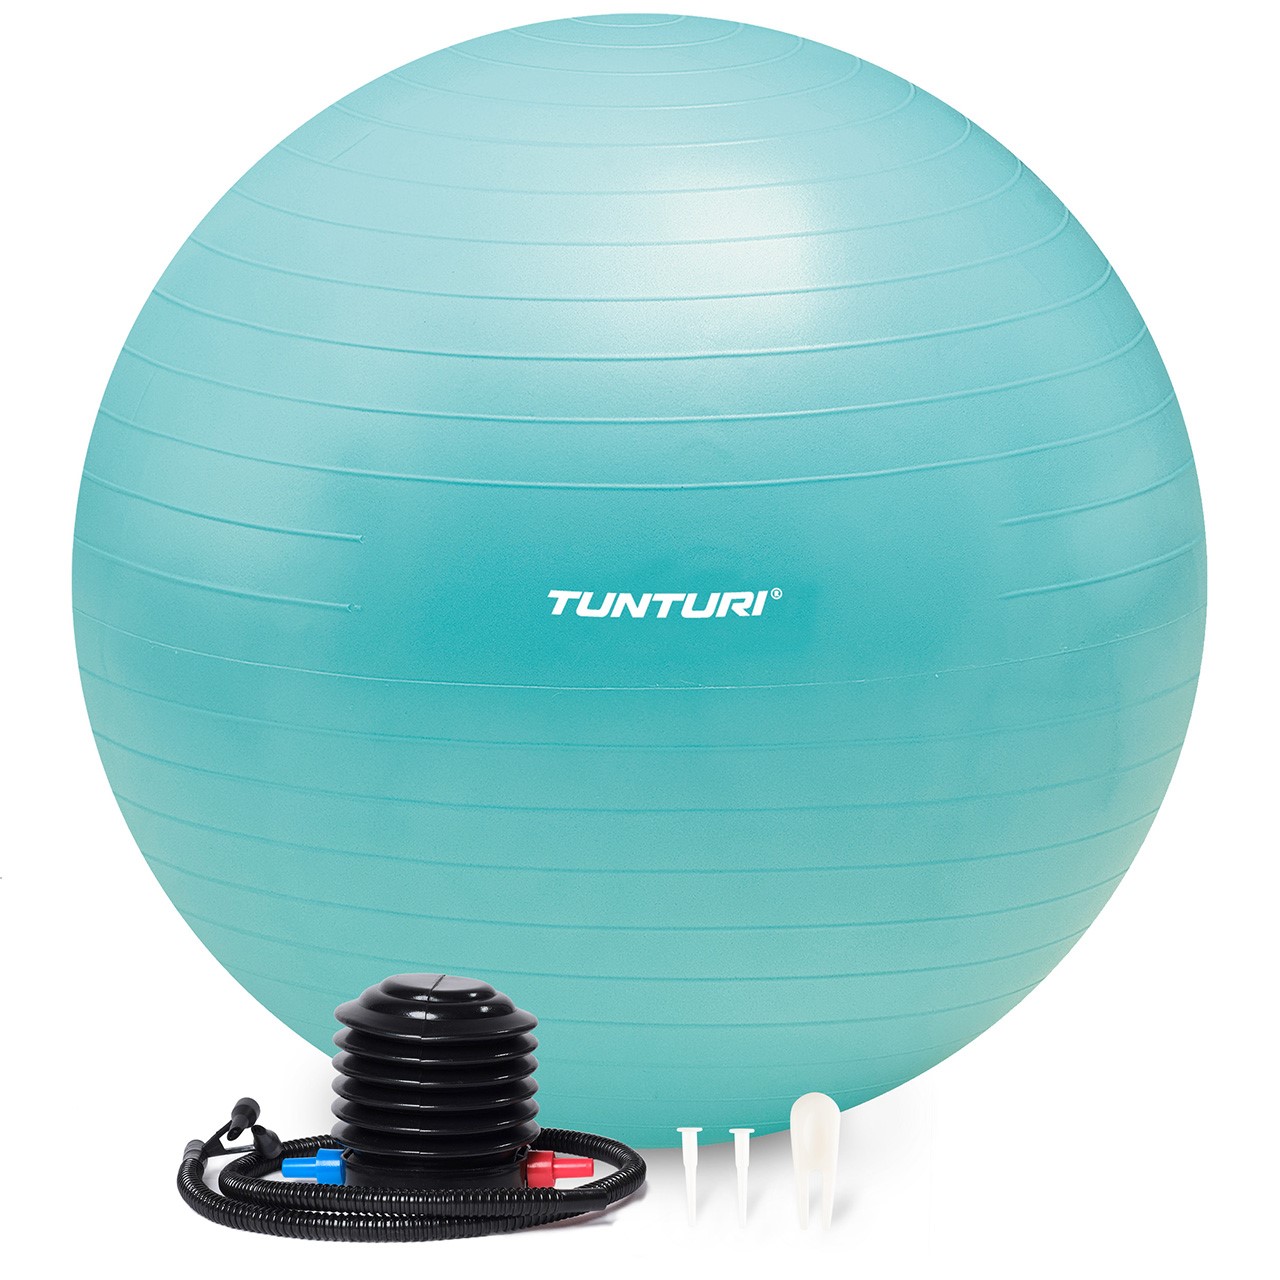 Tunturi Gym Ball - Fitnessball reissfest ABS 75 cm Türkis